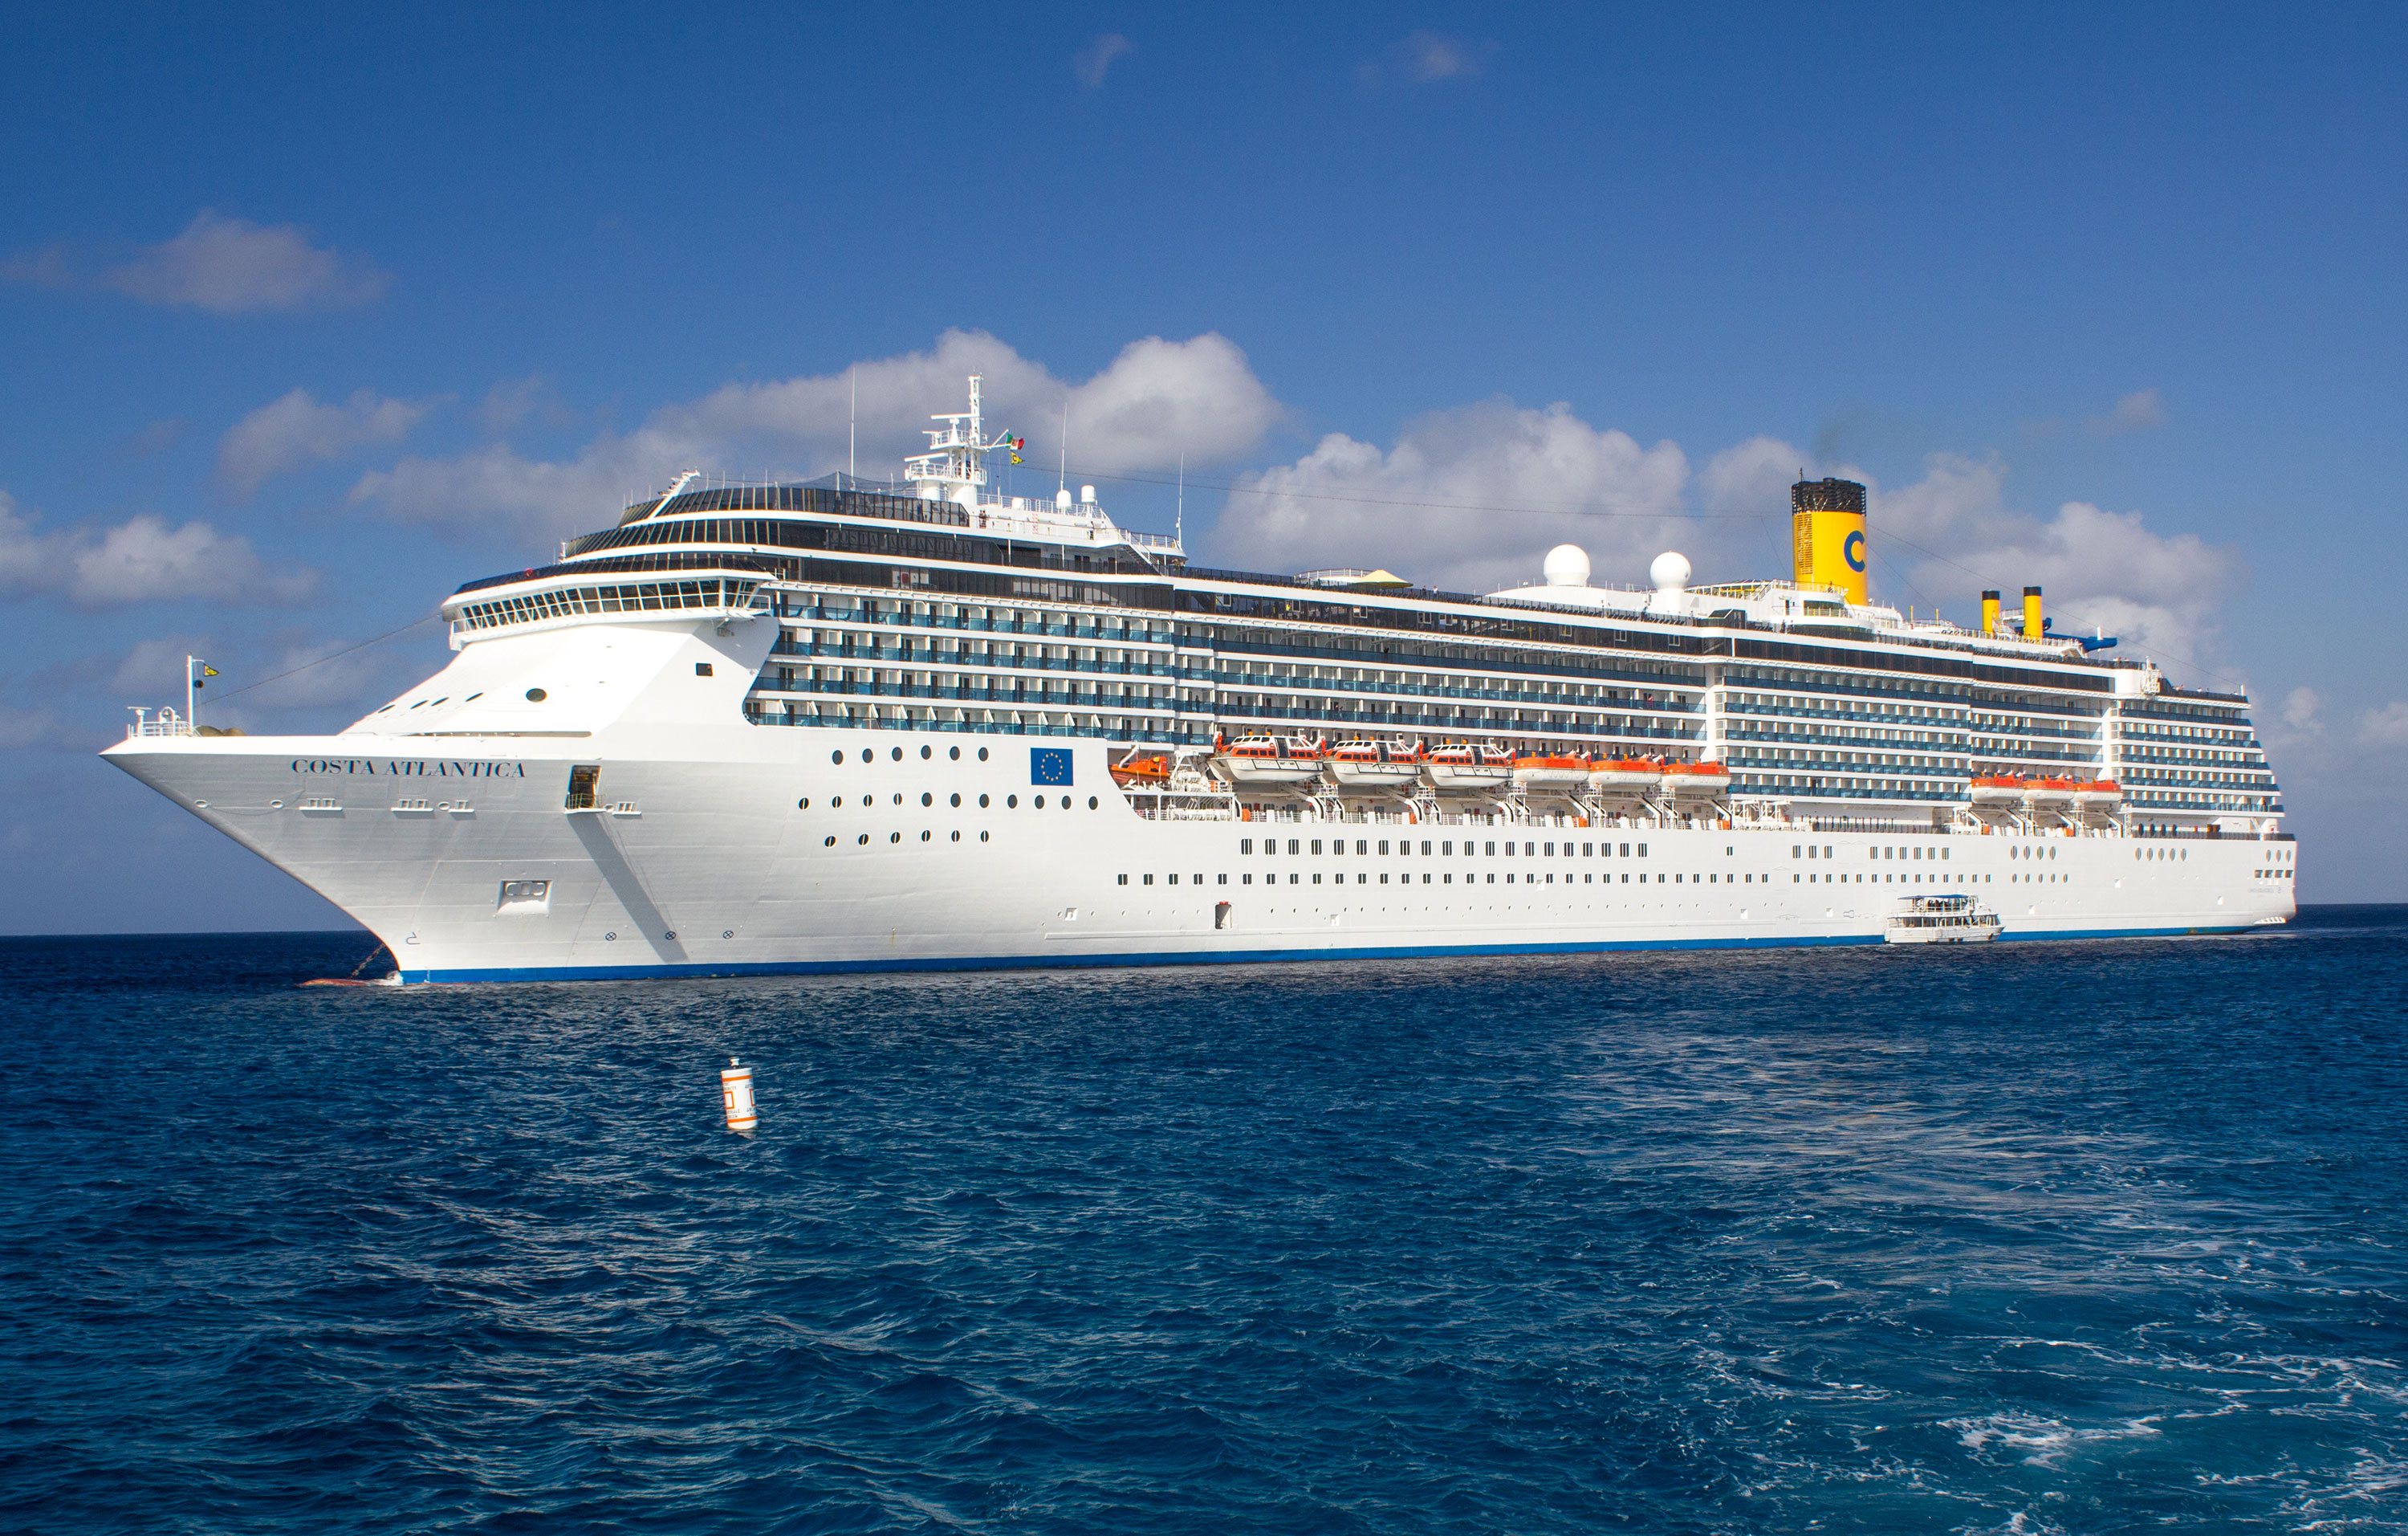 File photo of the Costa Atlantica cruise ship.